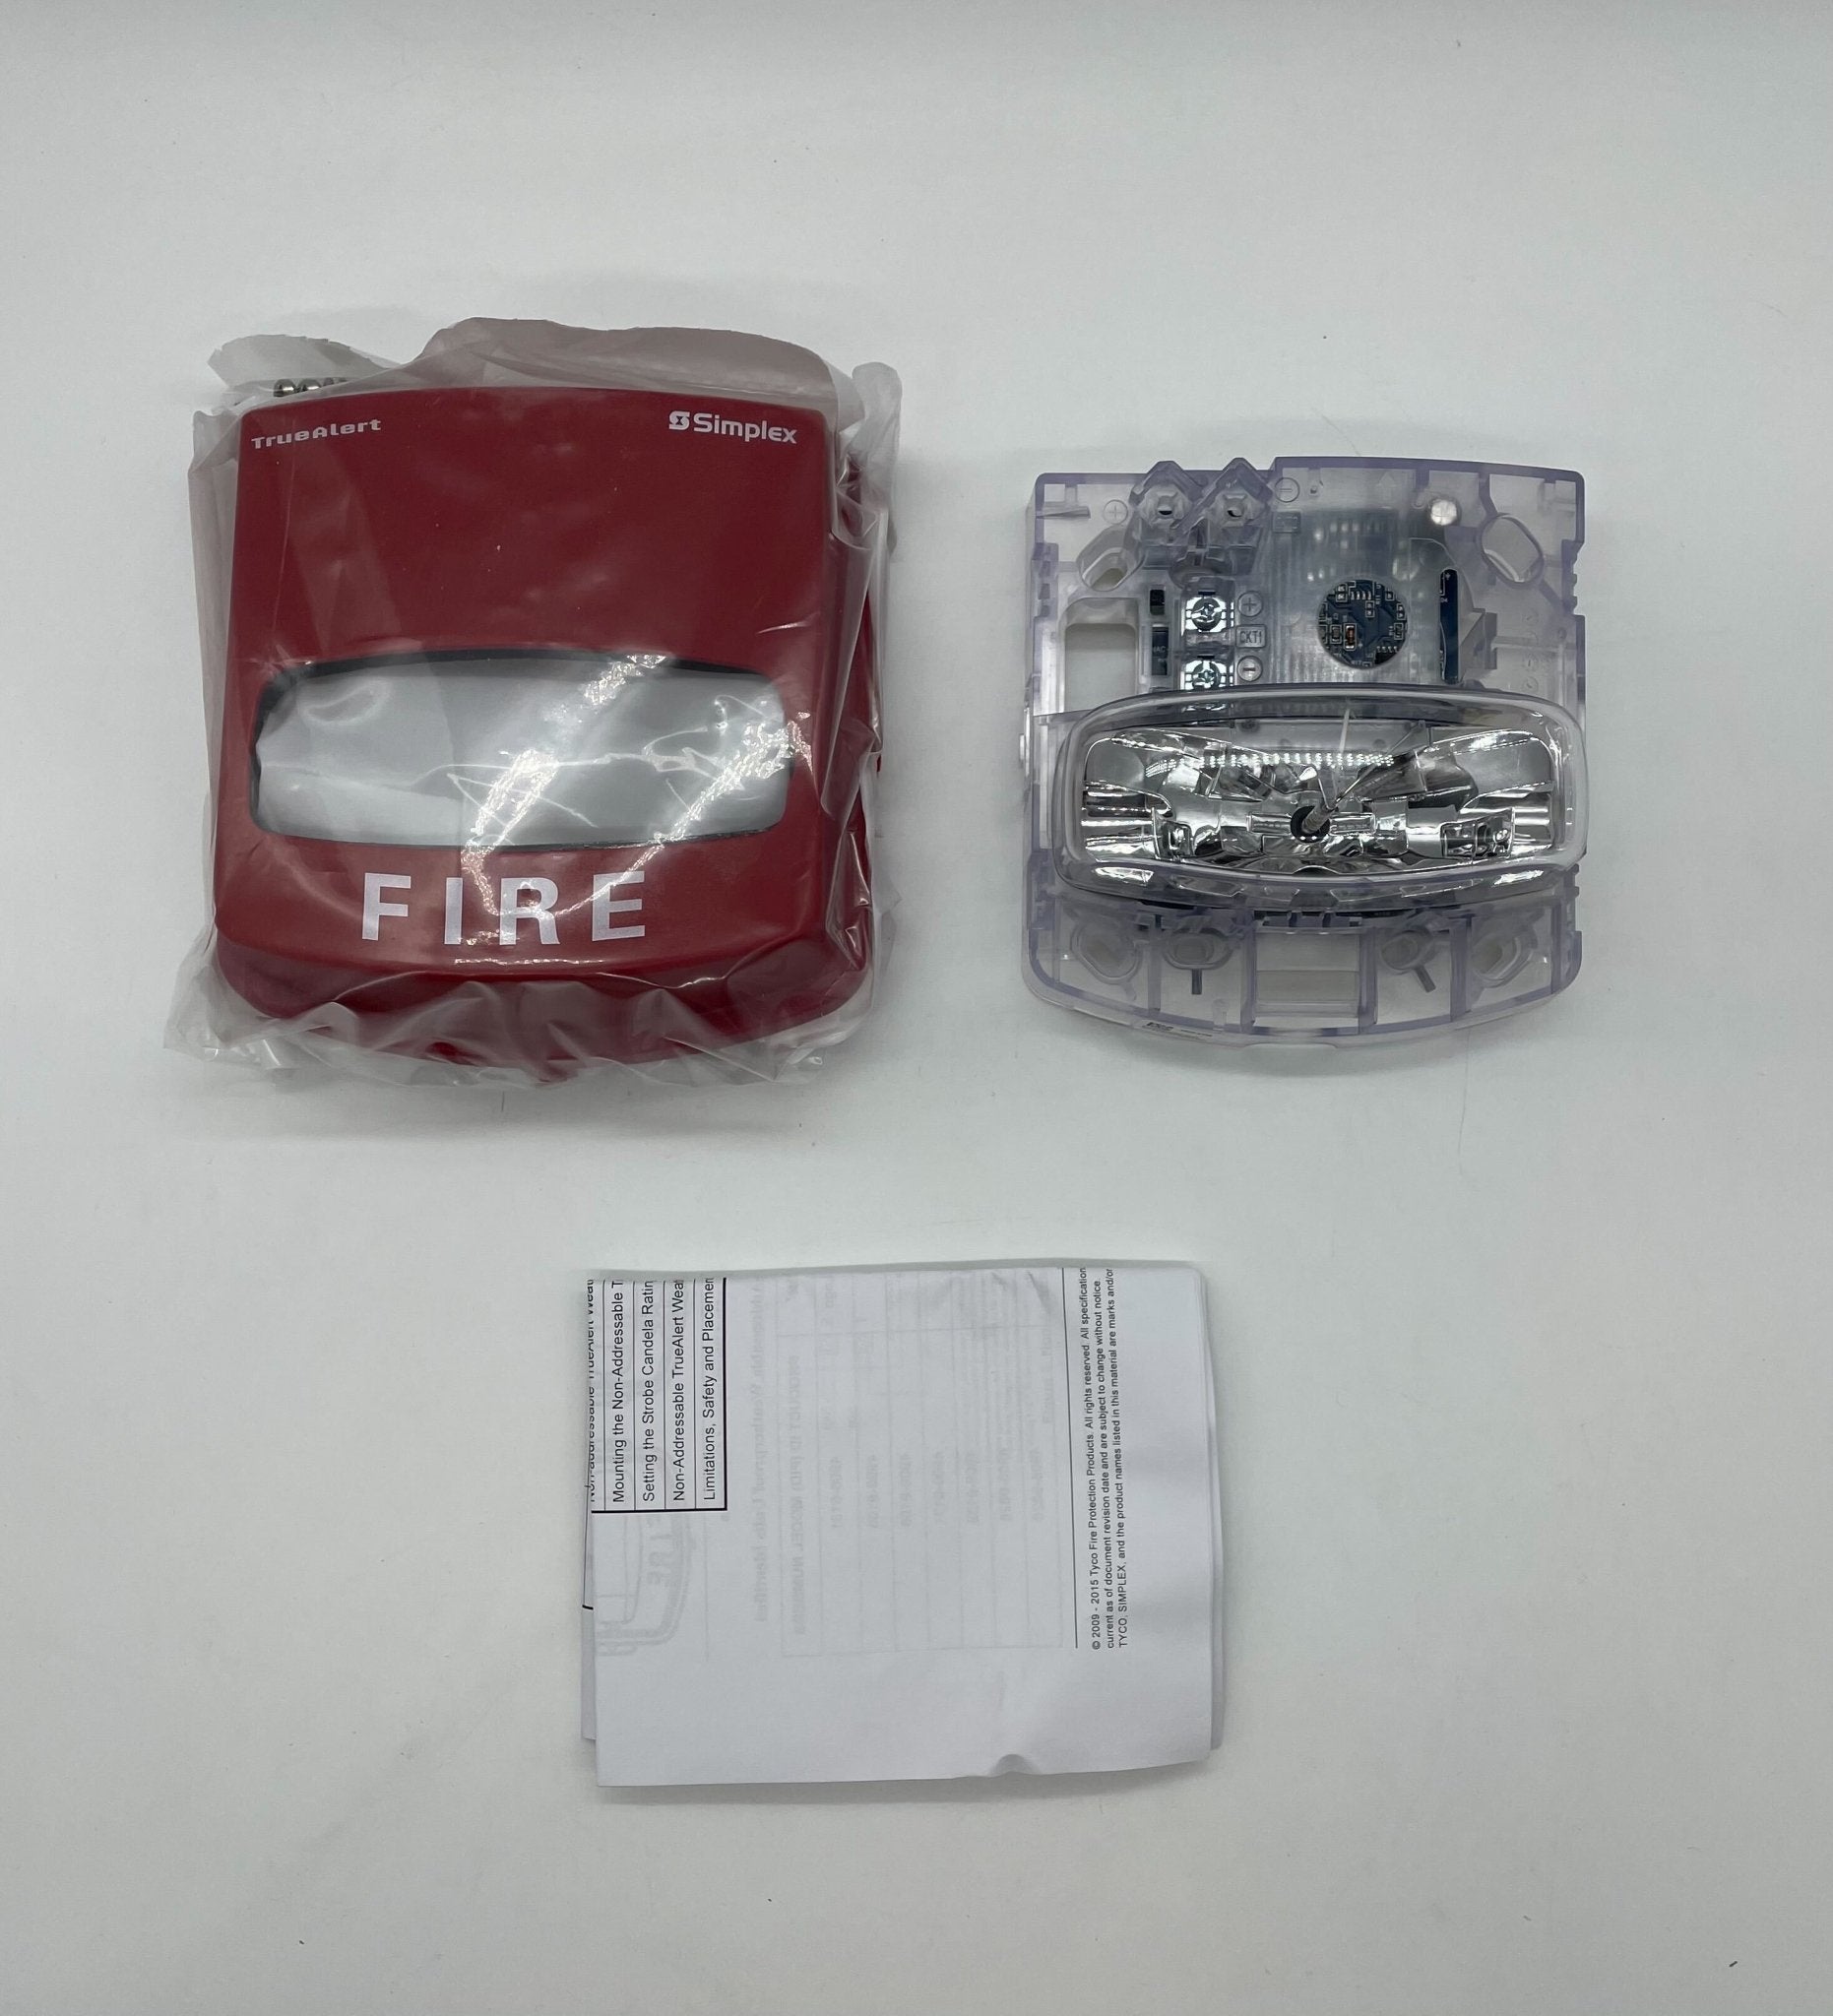 Simplex 4906-9105 Weatherproof Multi-Candela Strobe - The Fire Alarm Supplier